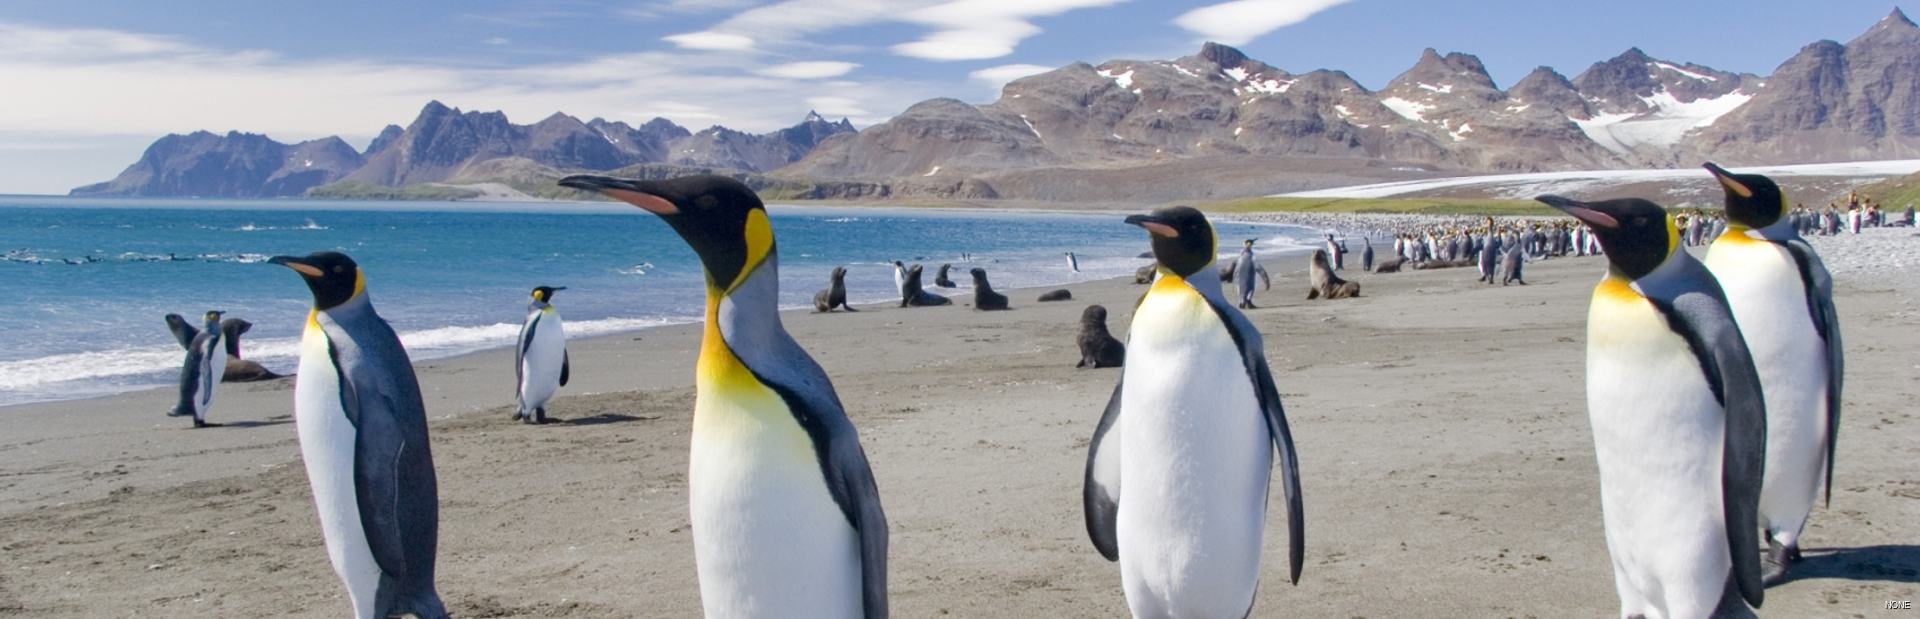 King penguins on a beach